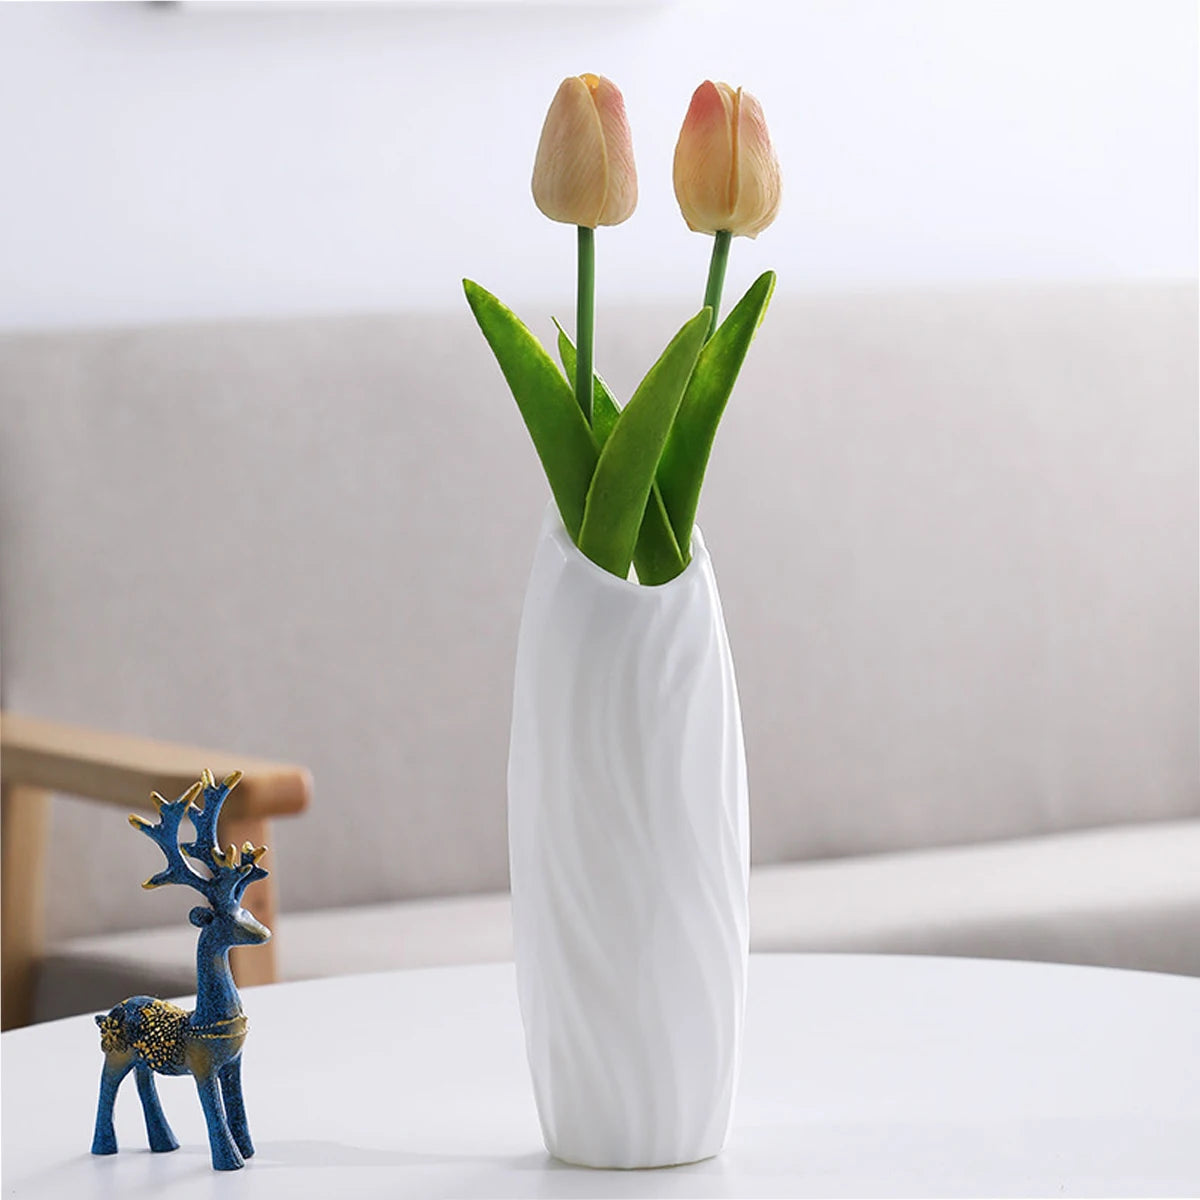 Plastic Vase Minimalist Small Flowerpot for Storing Flowers| Living Room Modern Home Decoration Ornaments